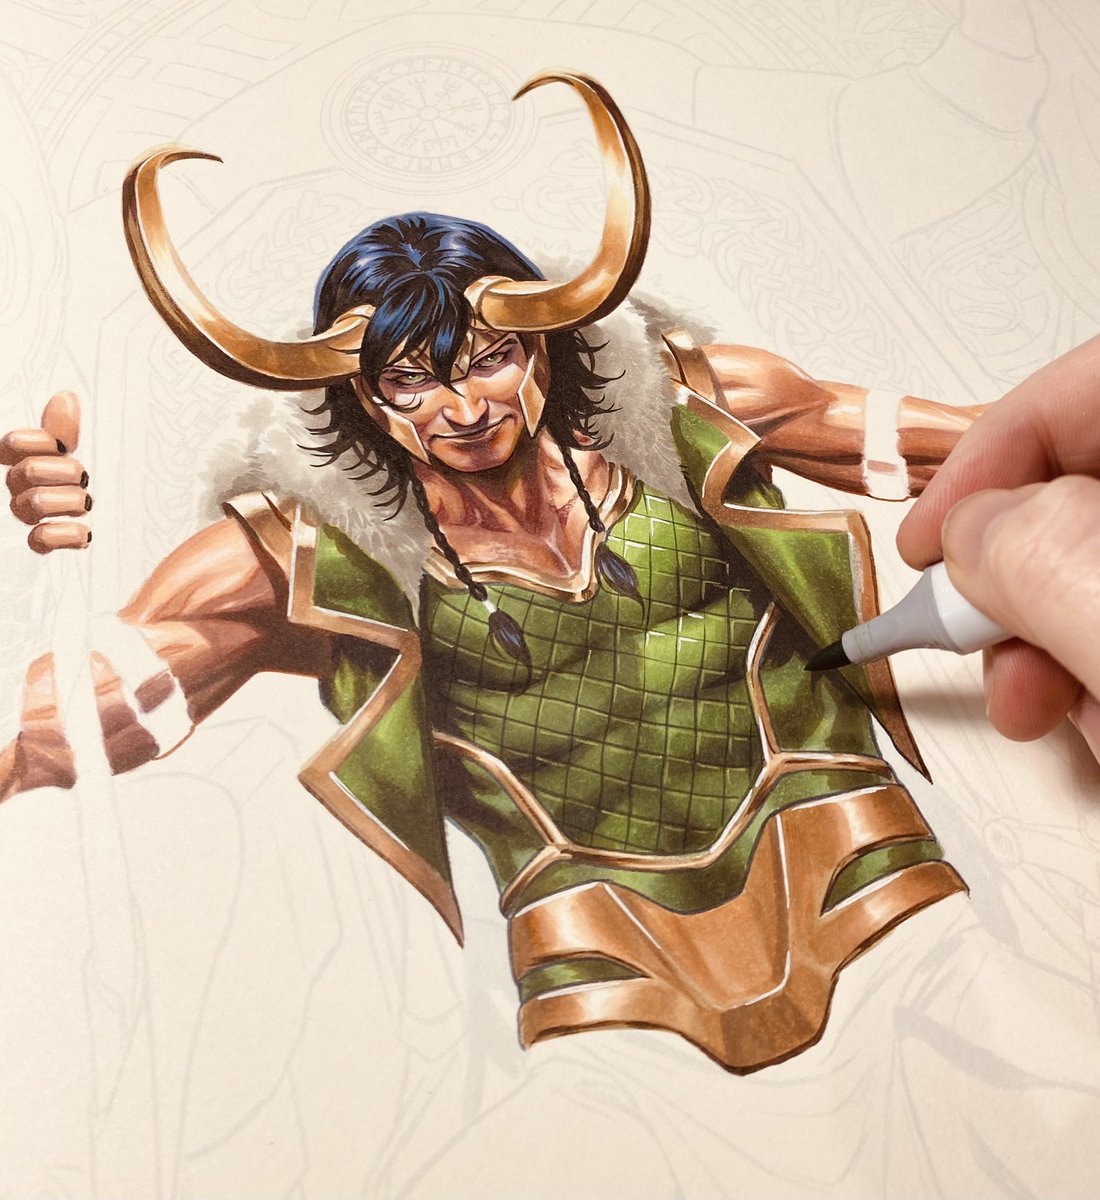 RT @MarkBrooksArt: On the drawingboard today- The God of Lies. #MarvelComics #Loki #Thor #MarkBrooks https://t.co/wCaDFXhxyH